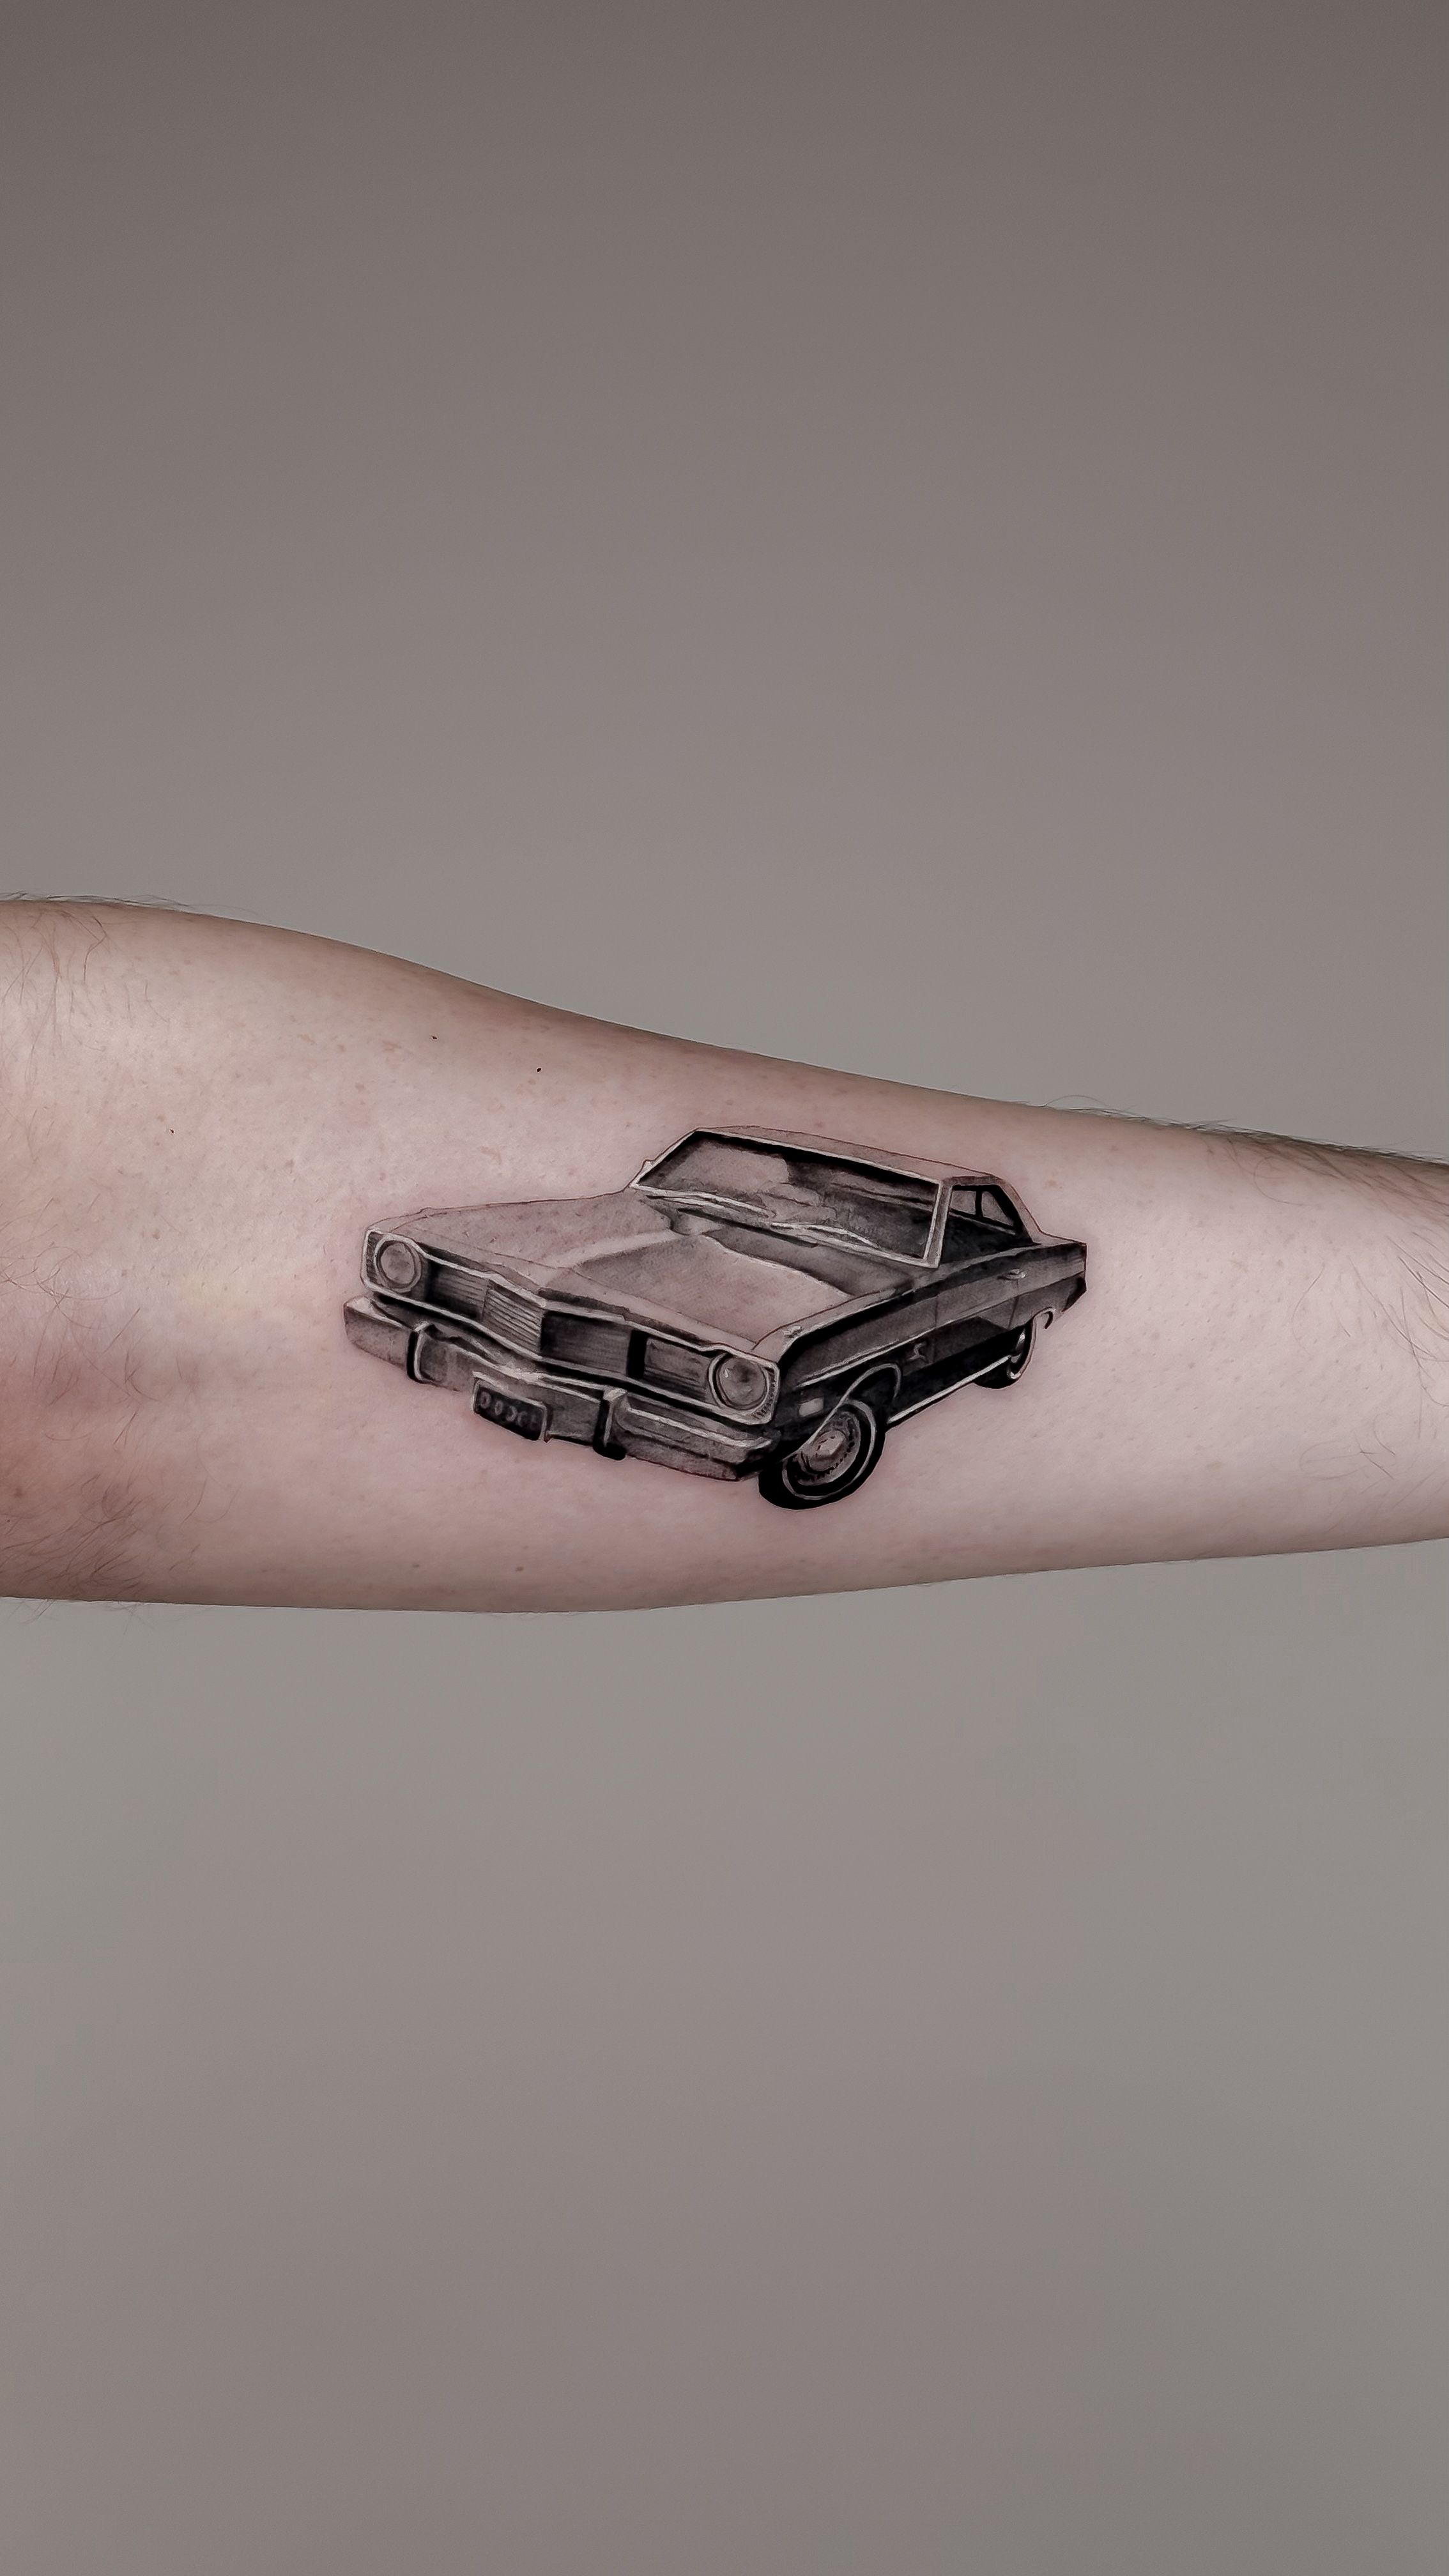 A toaster that looks like a tank less detail simple cartoon tattoo idea |  TattoosAI